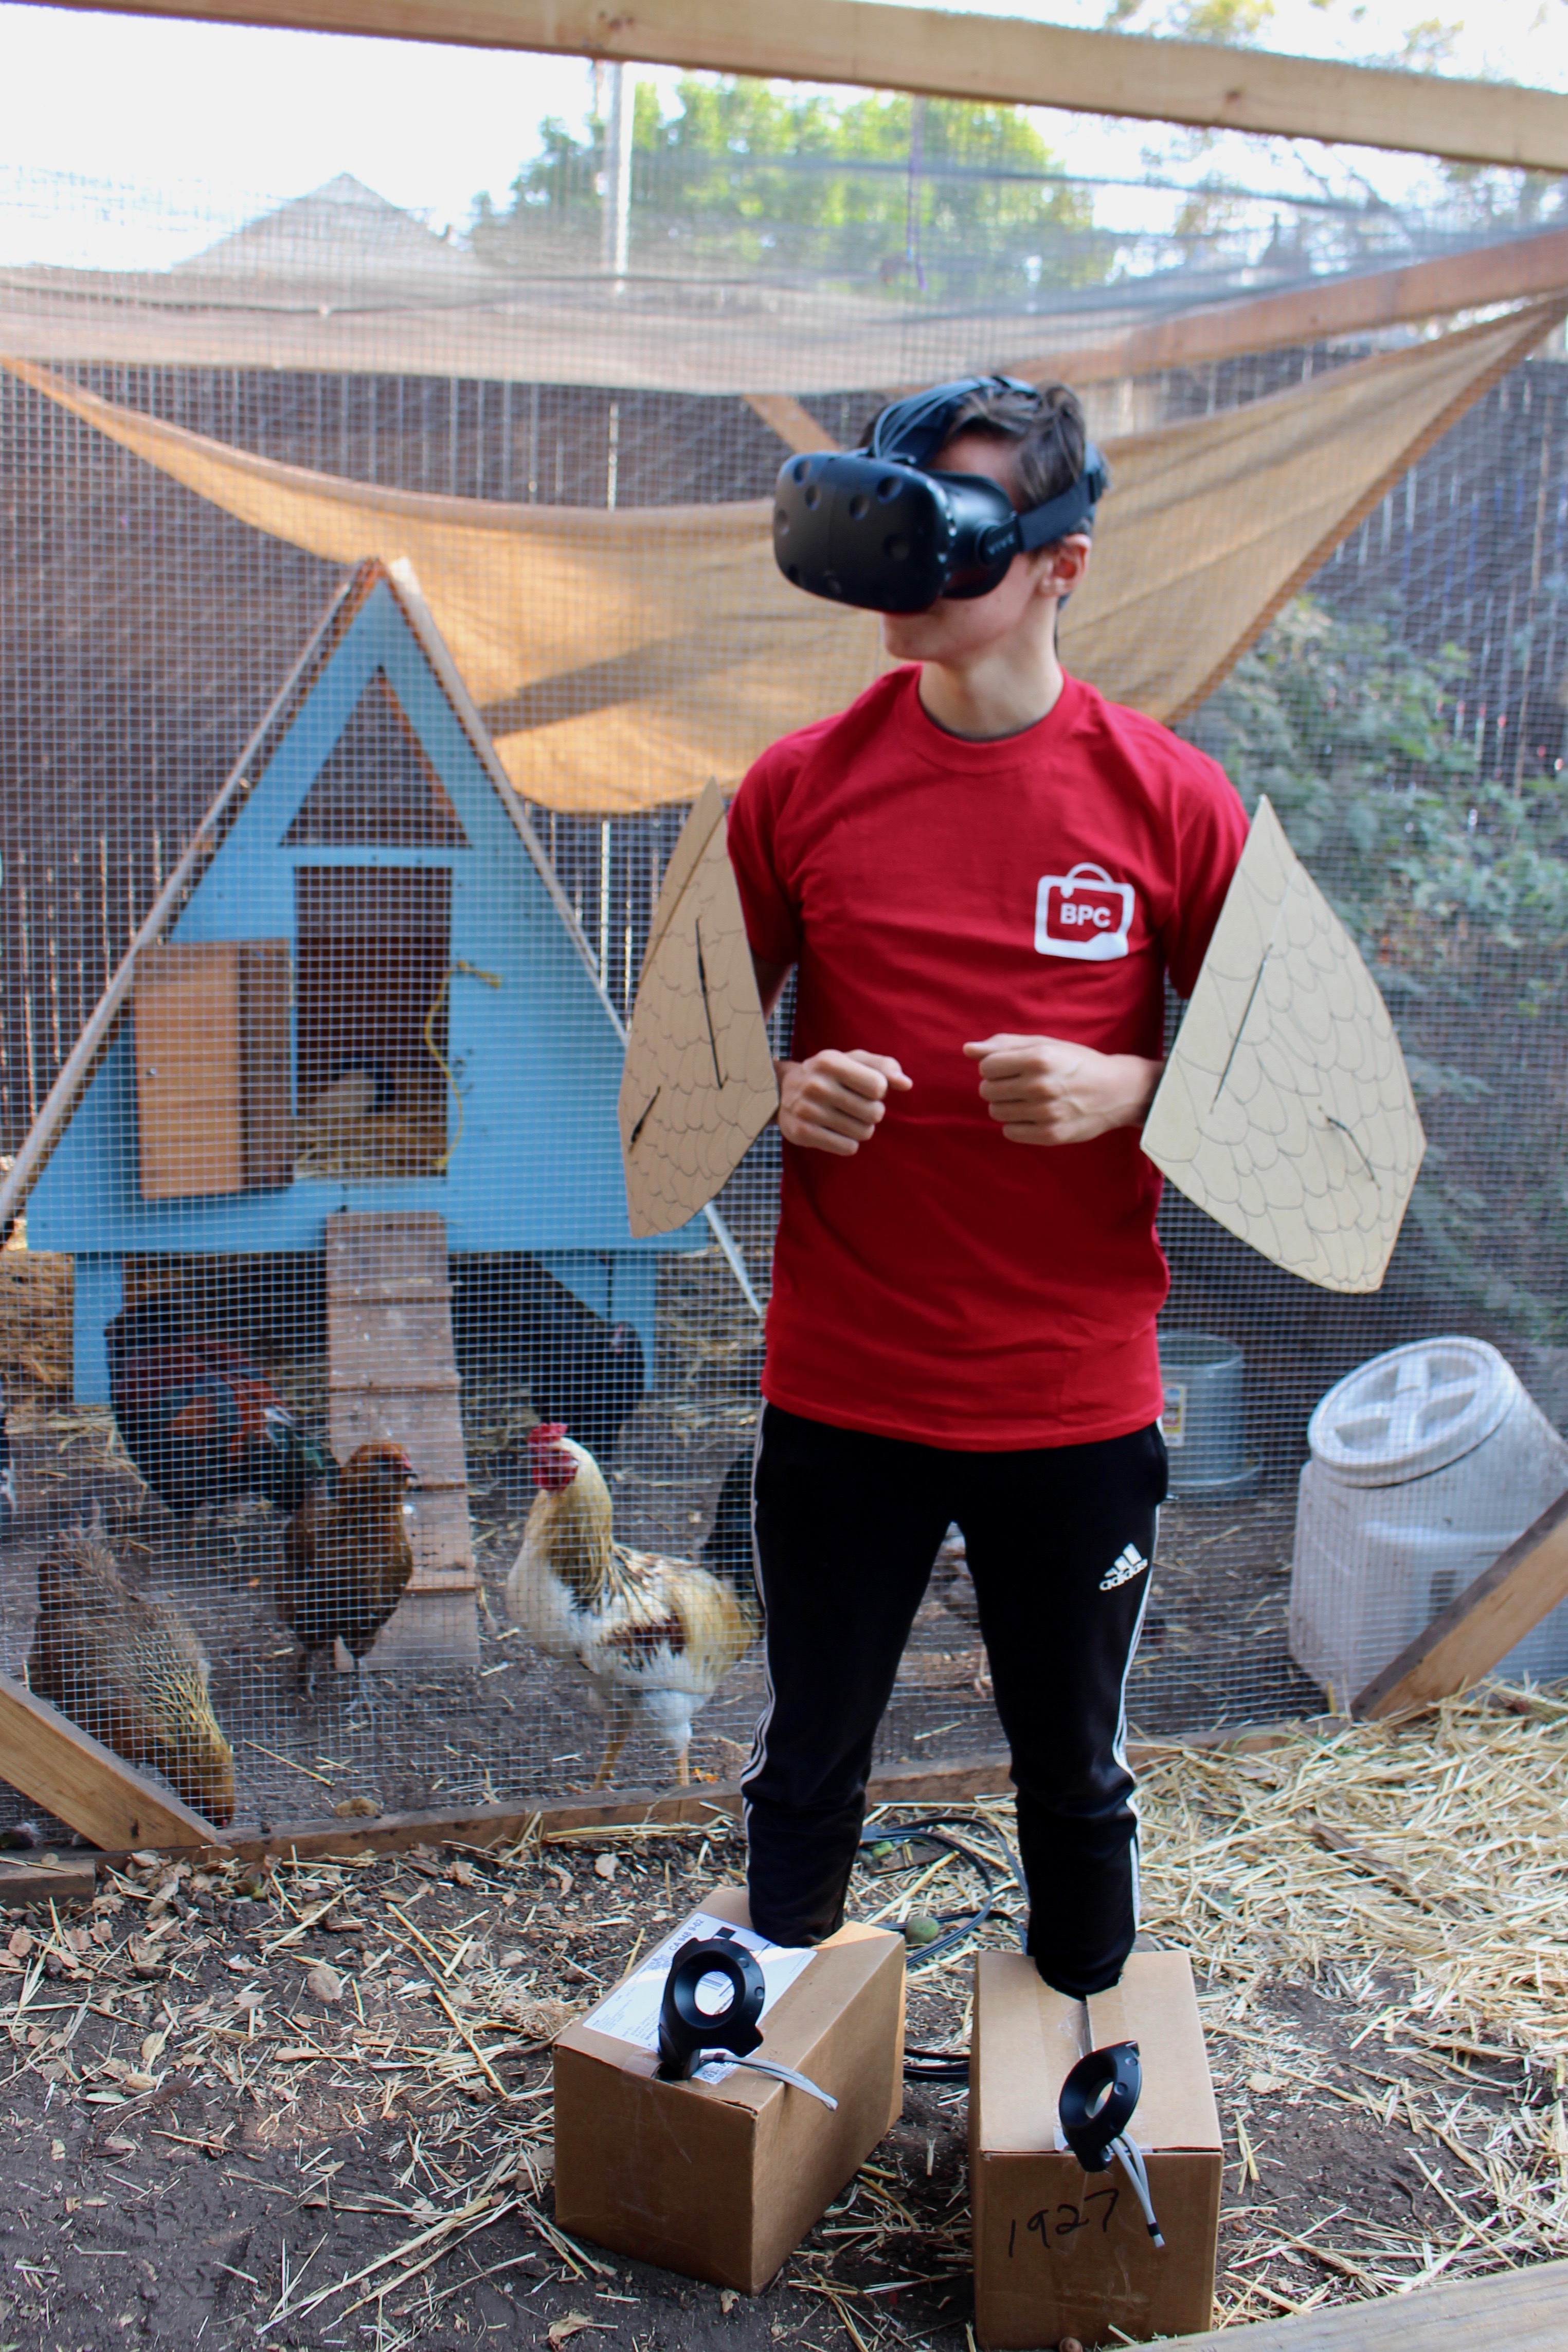 Chicken VR